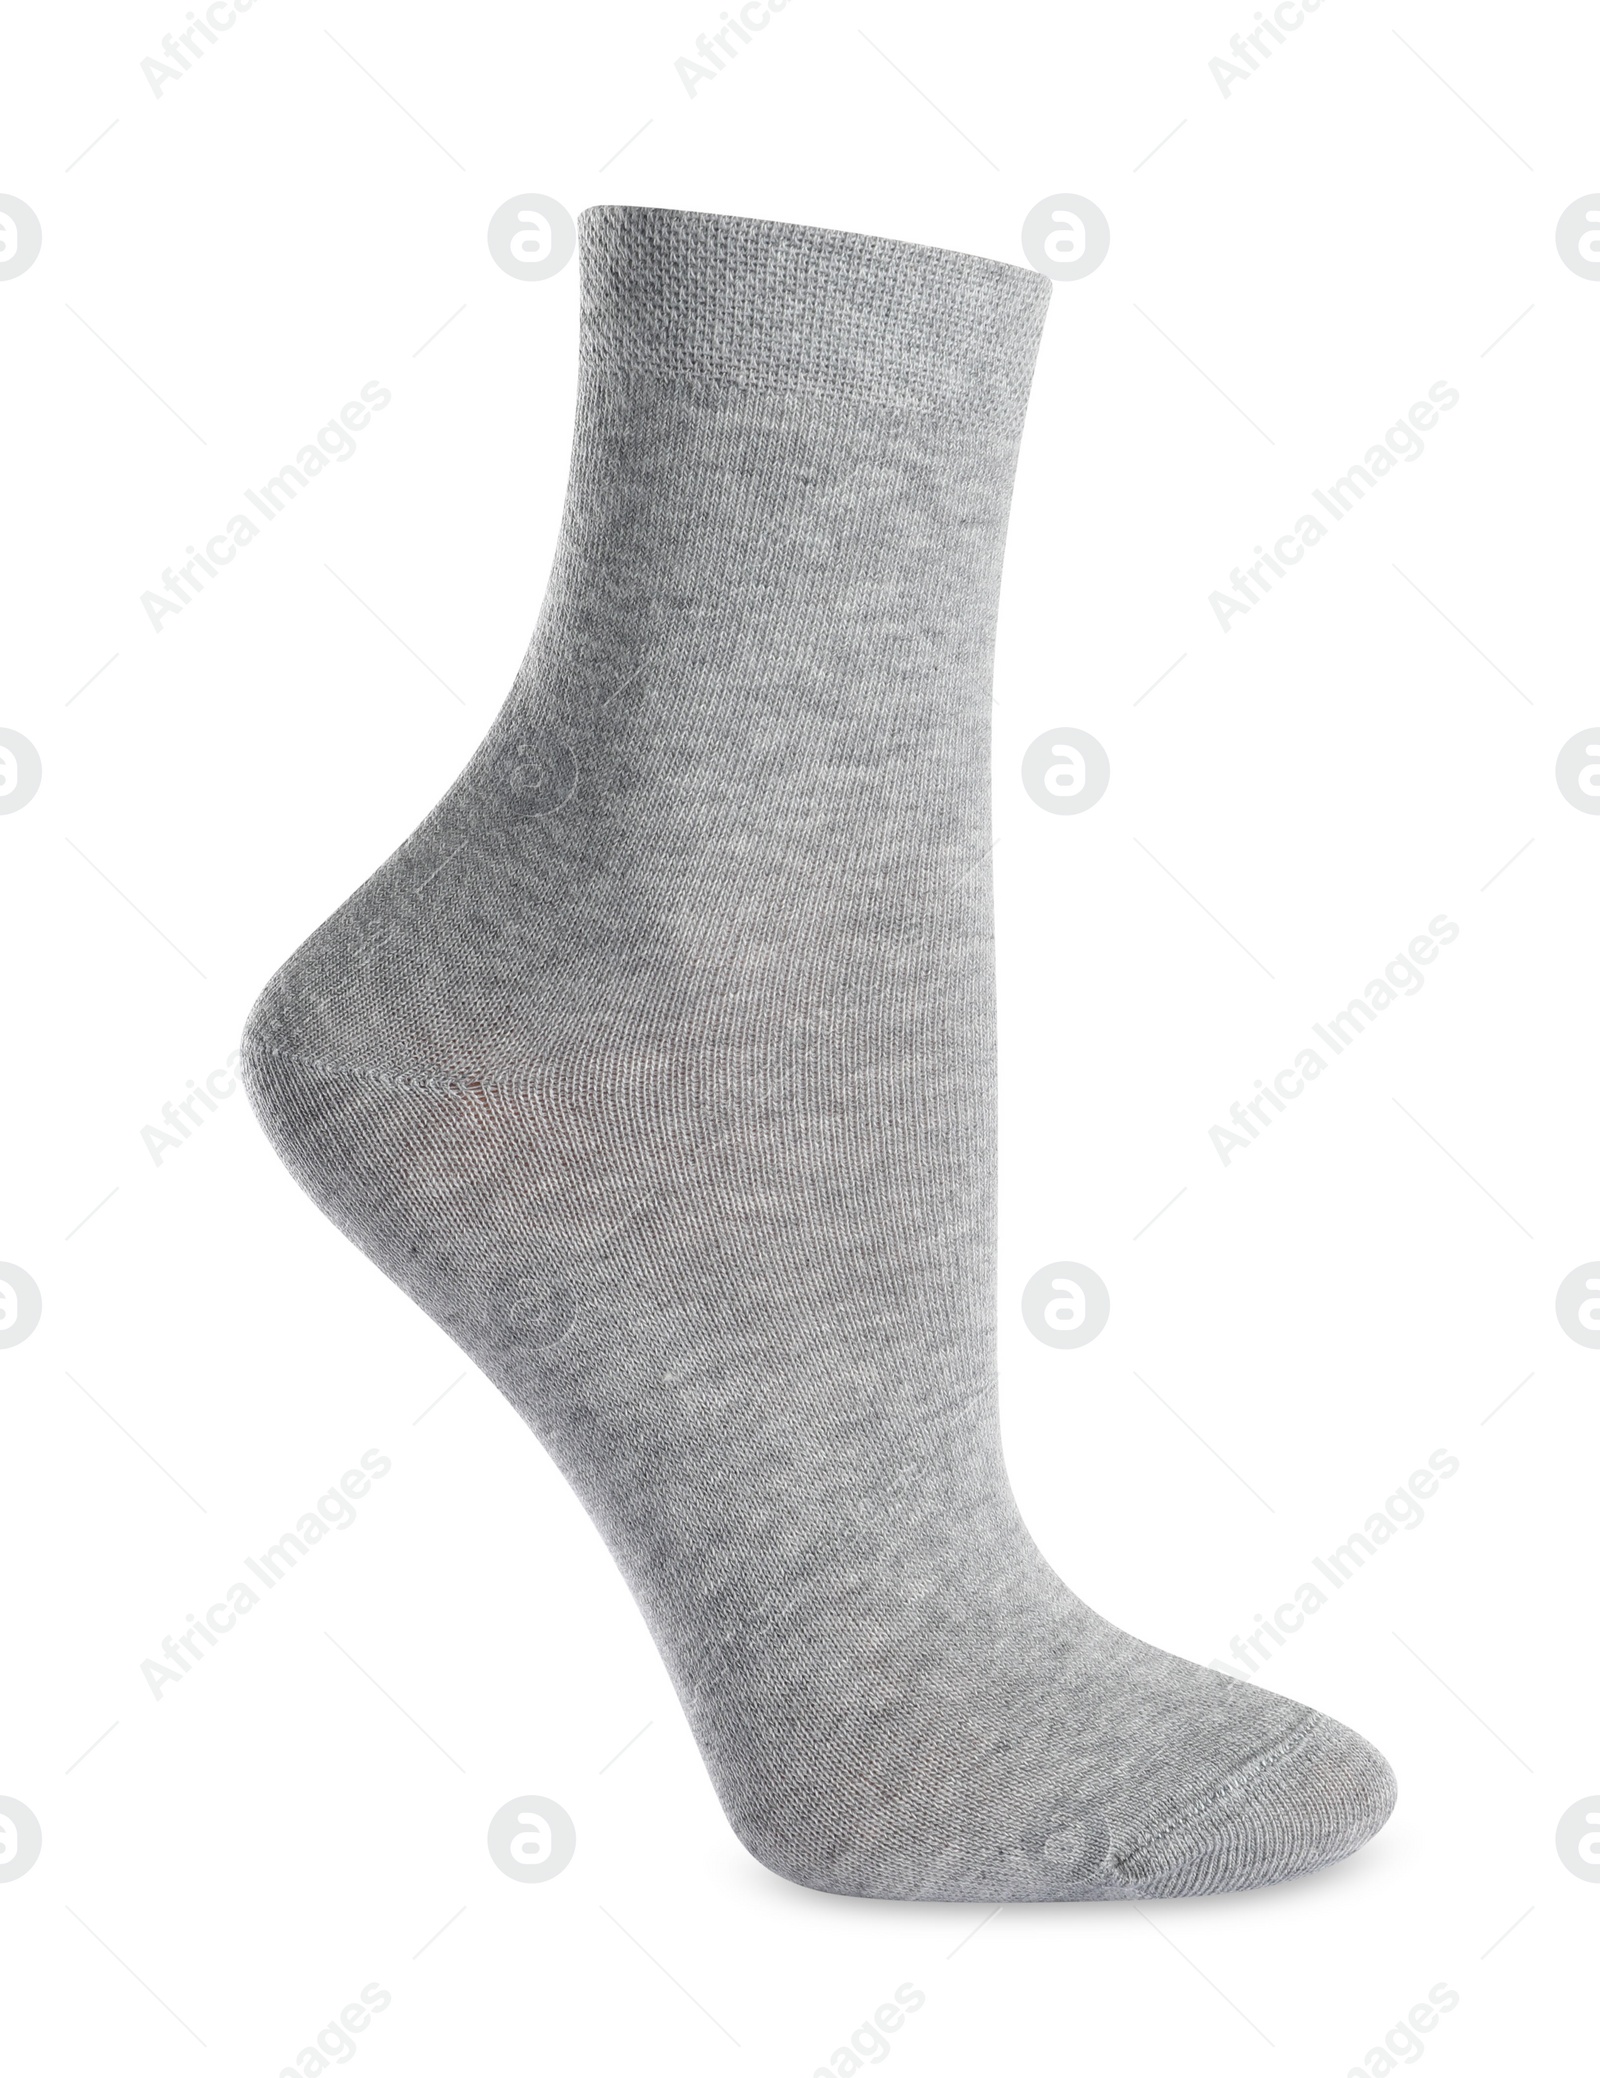 Photo of One light grey sock isolated on white